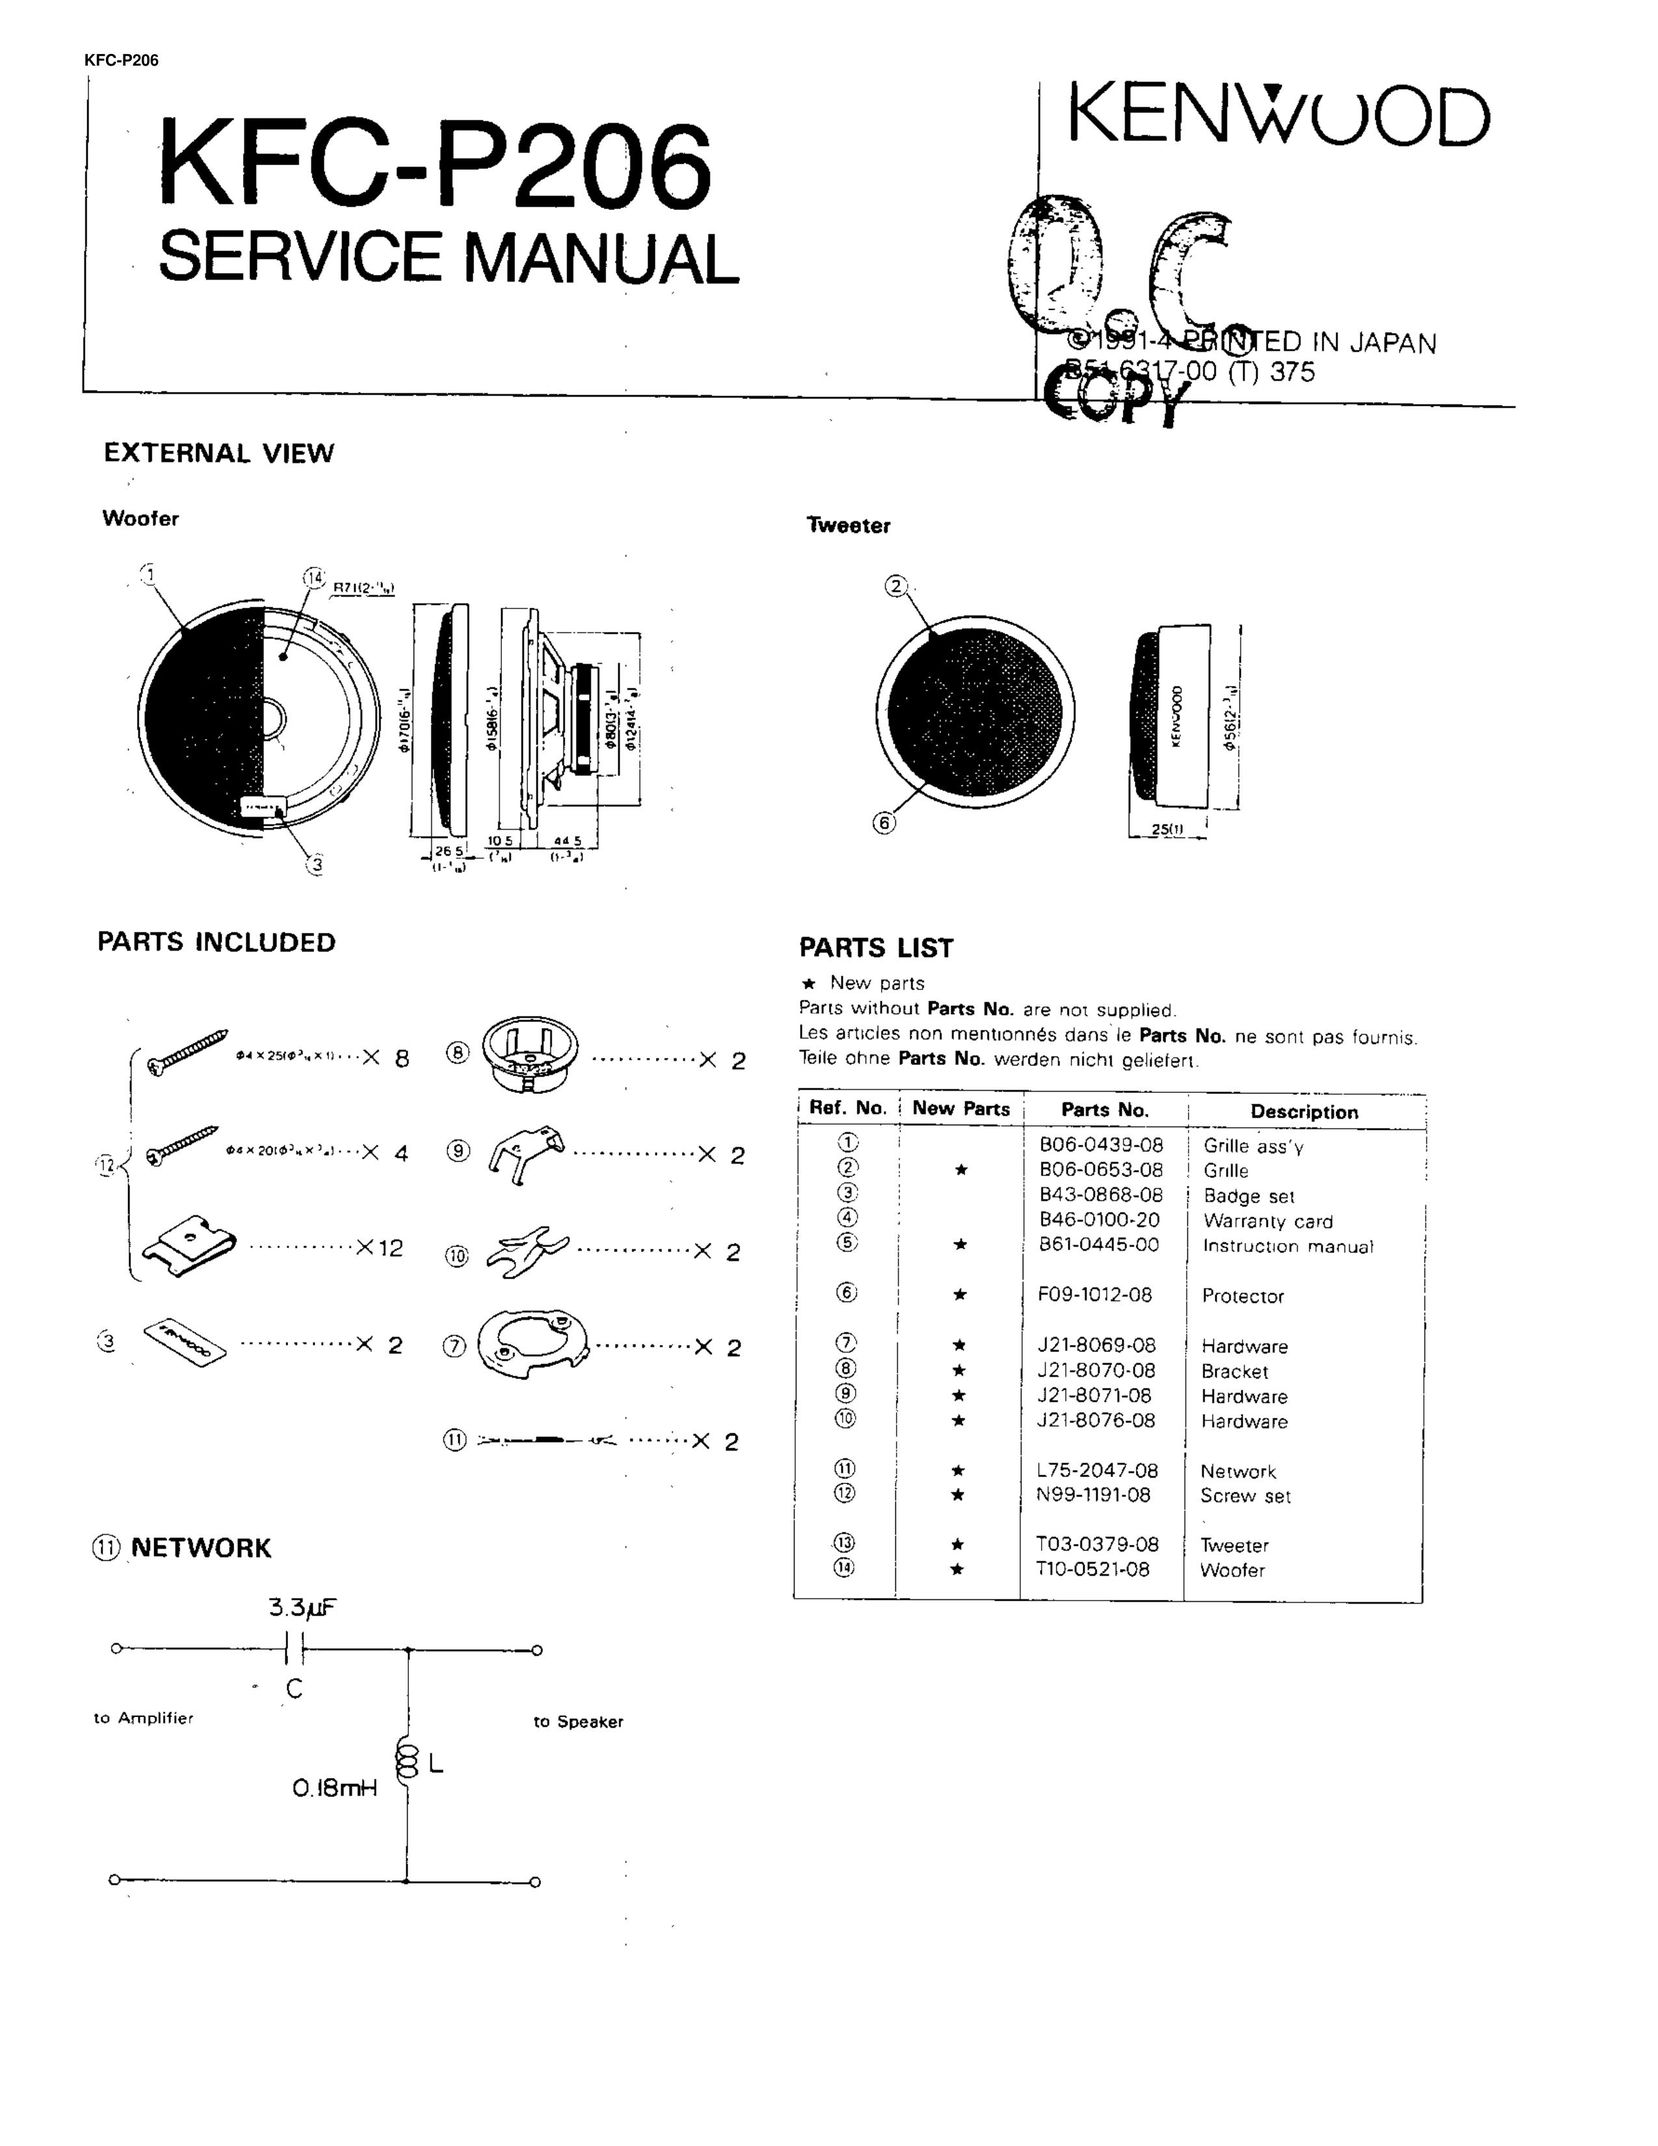 Kenwood KFC-P206 Speaker User Manual